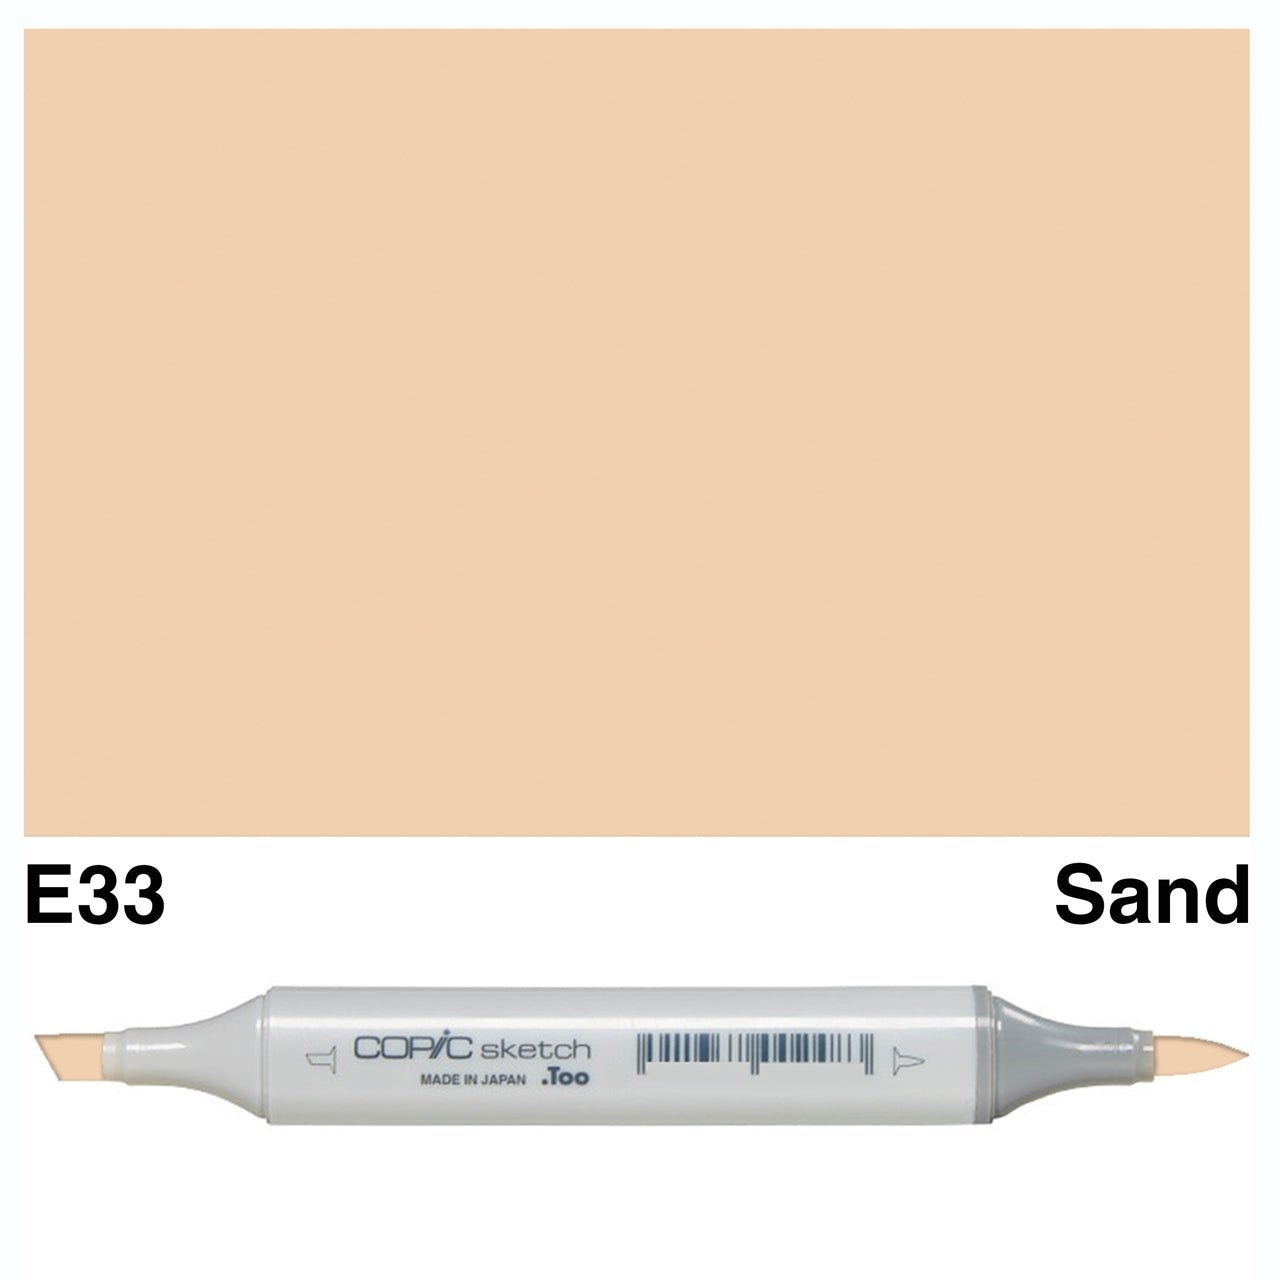 Copic Sketch E33 Sand - theartshop.com.au